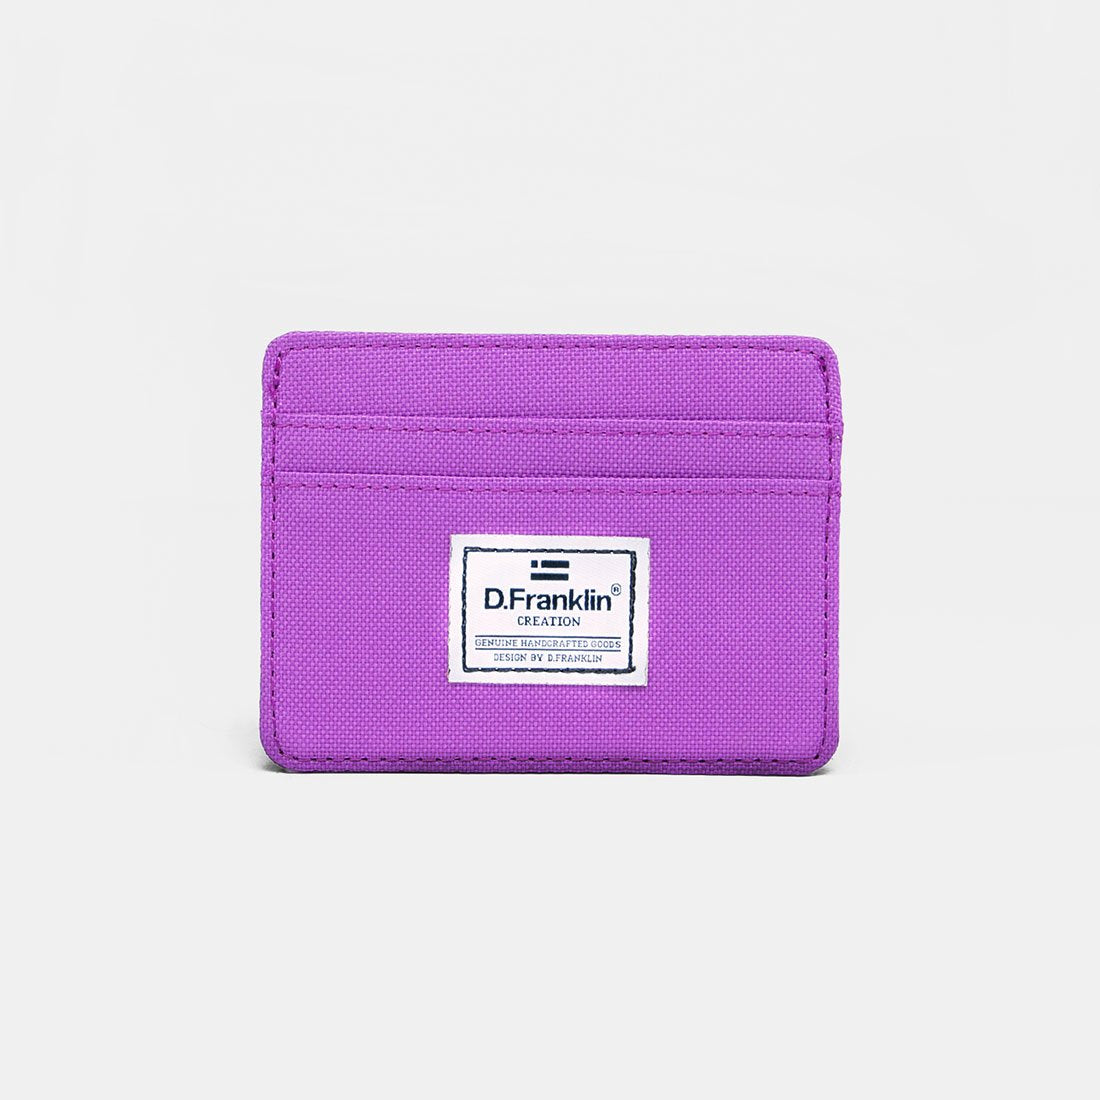 Purple Cardholder